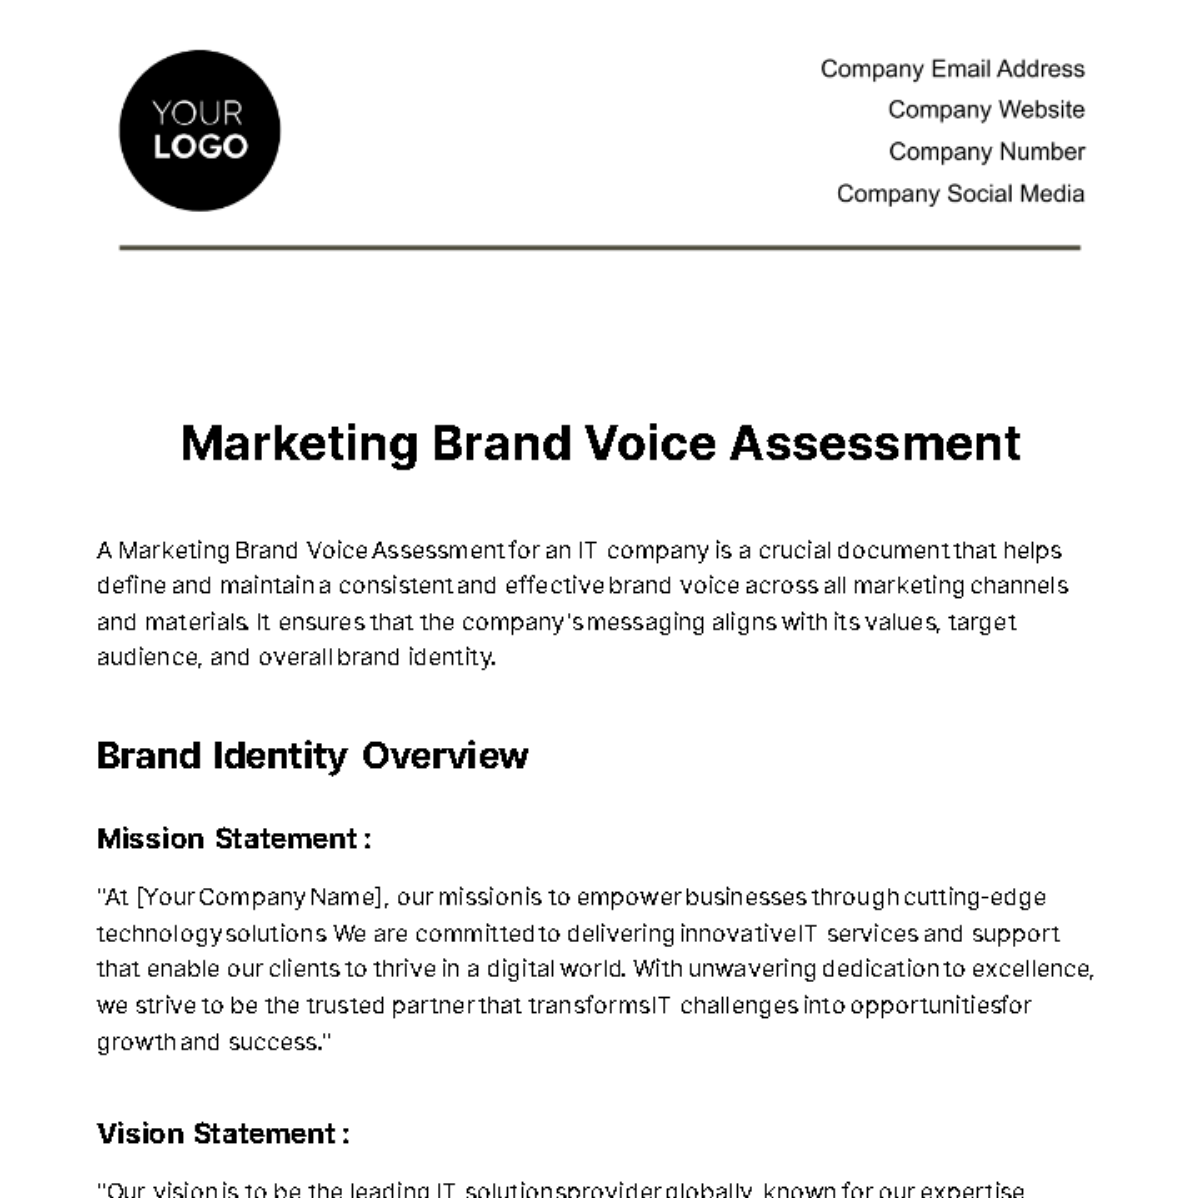 Marketing Brand Voice Assessment Template